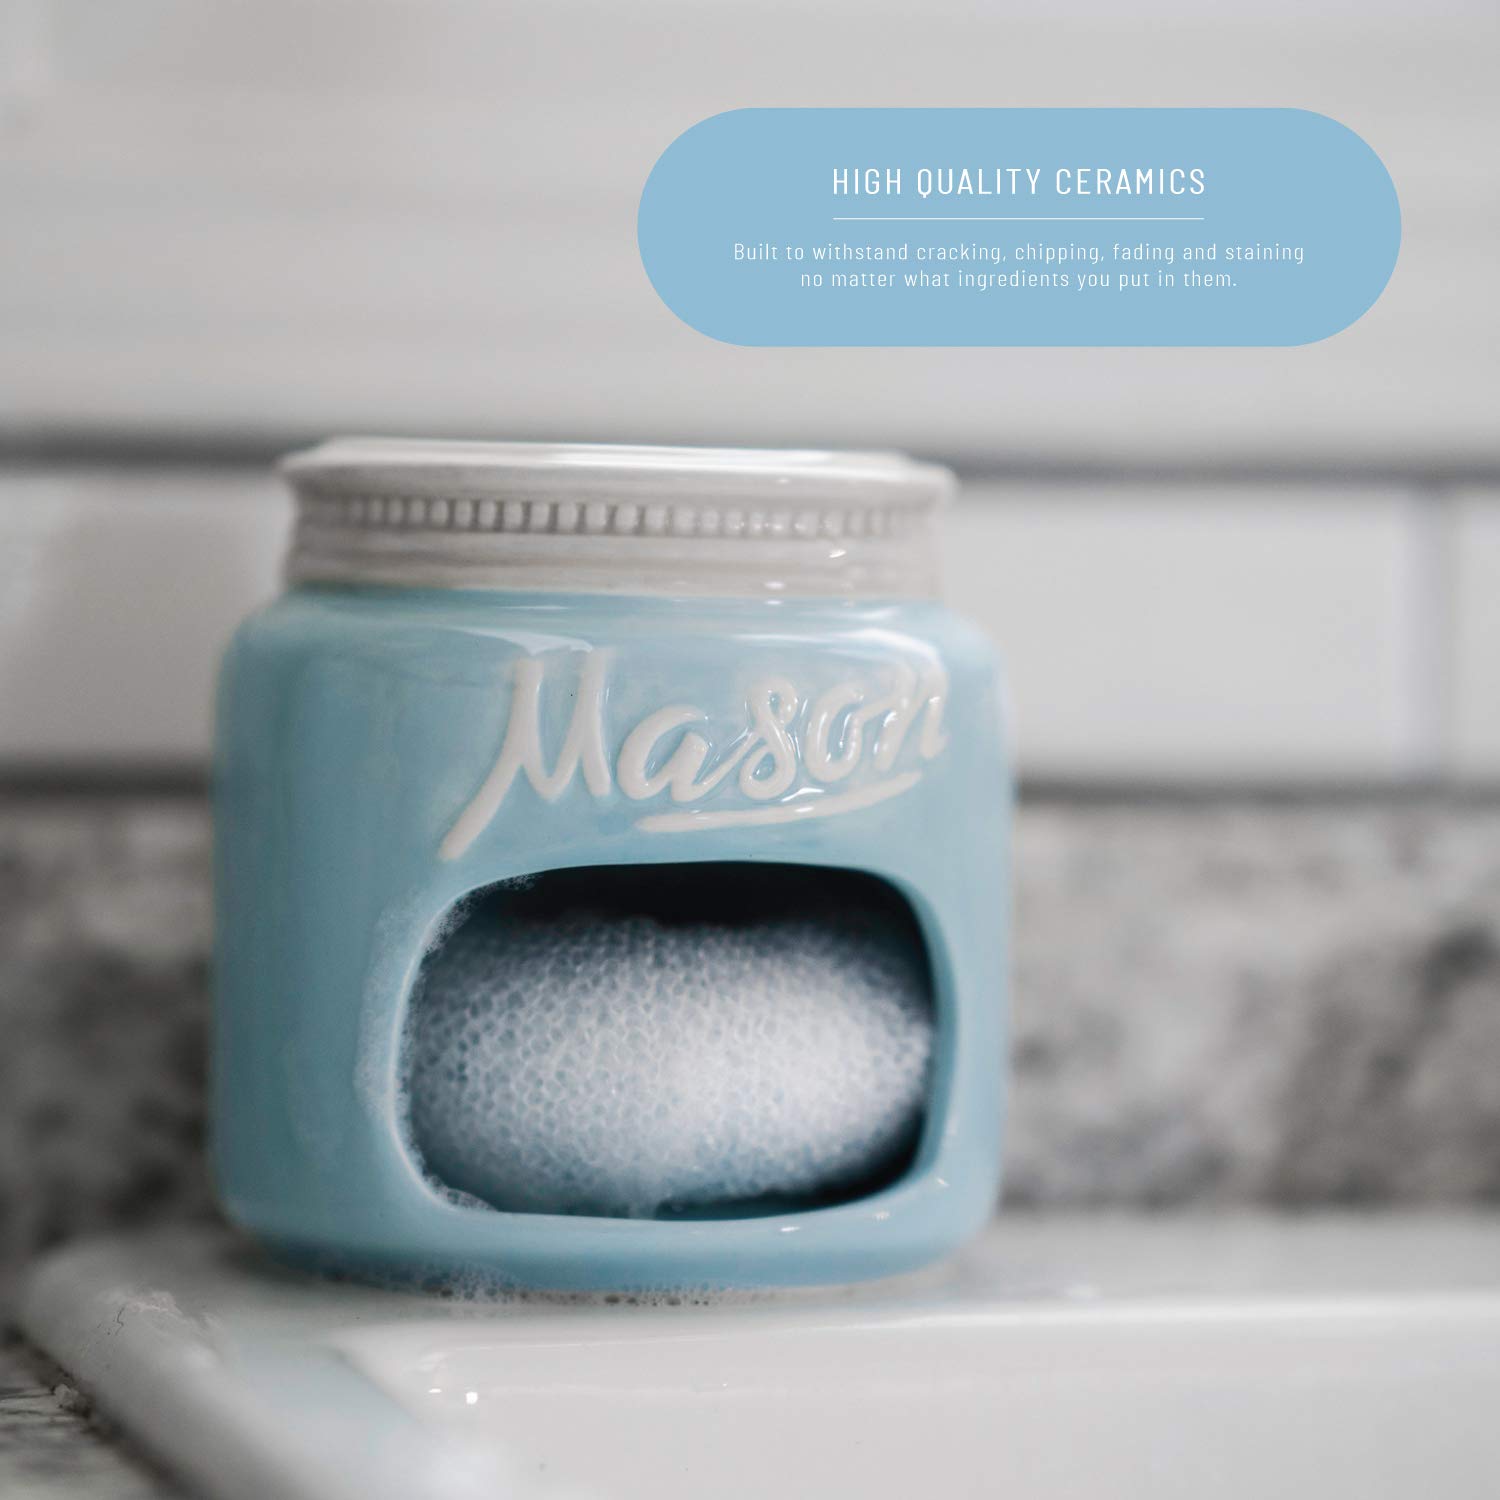 Blue Ceramic Mason Jar Kitchen Sink Sponge Holder – Farmhouse Kitchen Accessories, Ceramic Sponge Holder - Dishwashing & Cleaning Organizer - Holiday Gift for Family, Friends & Collectors